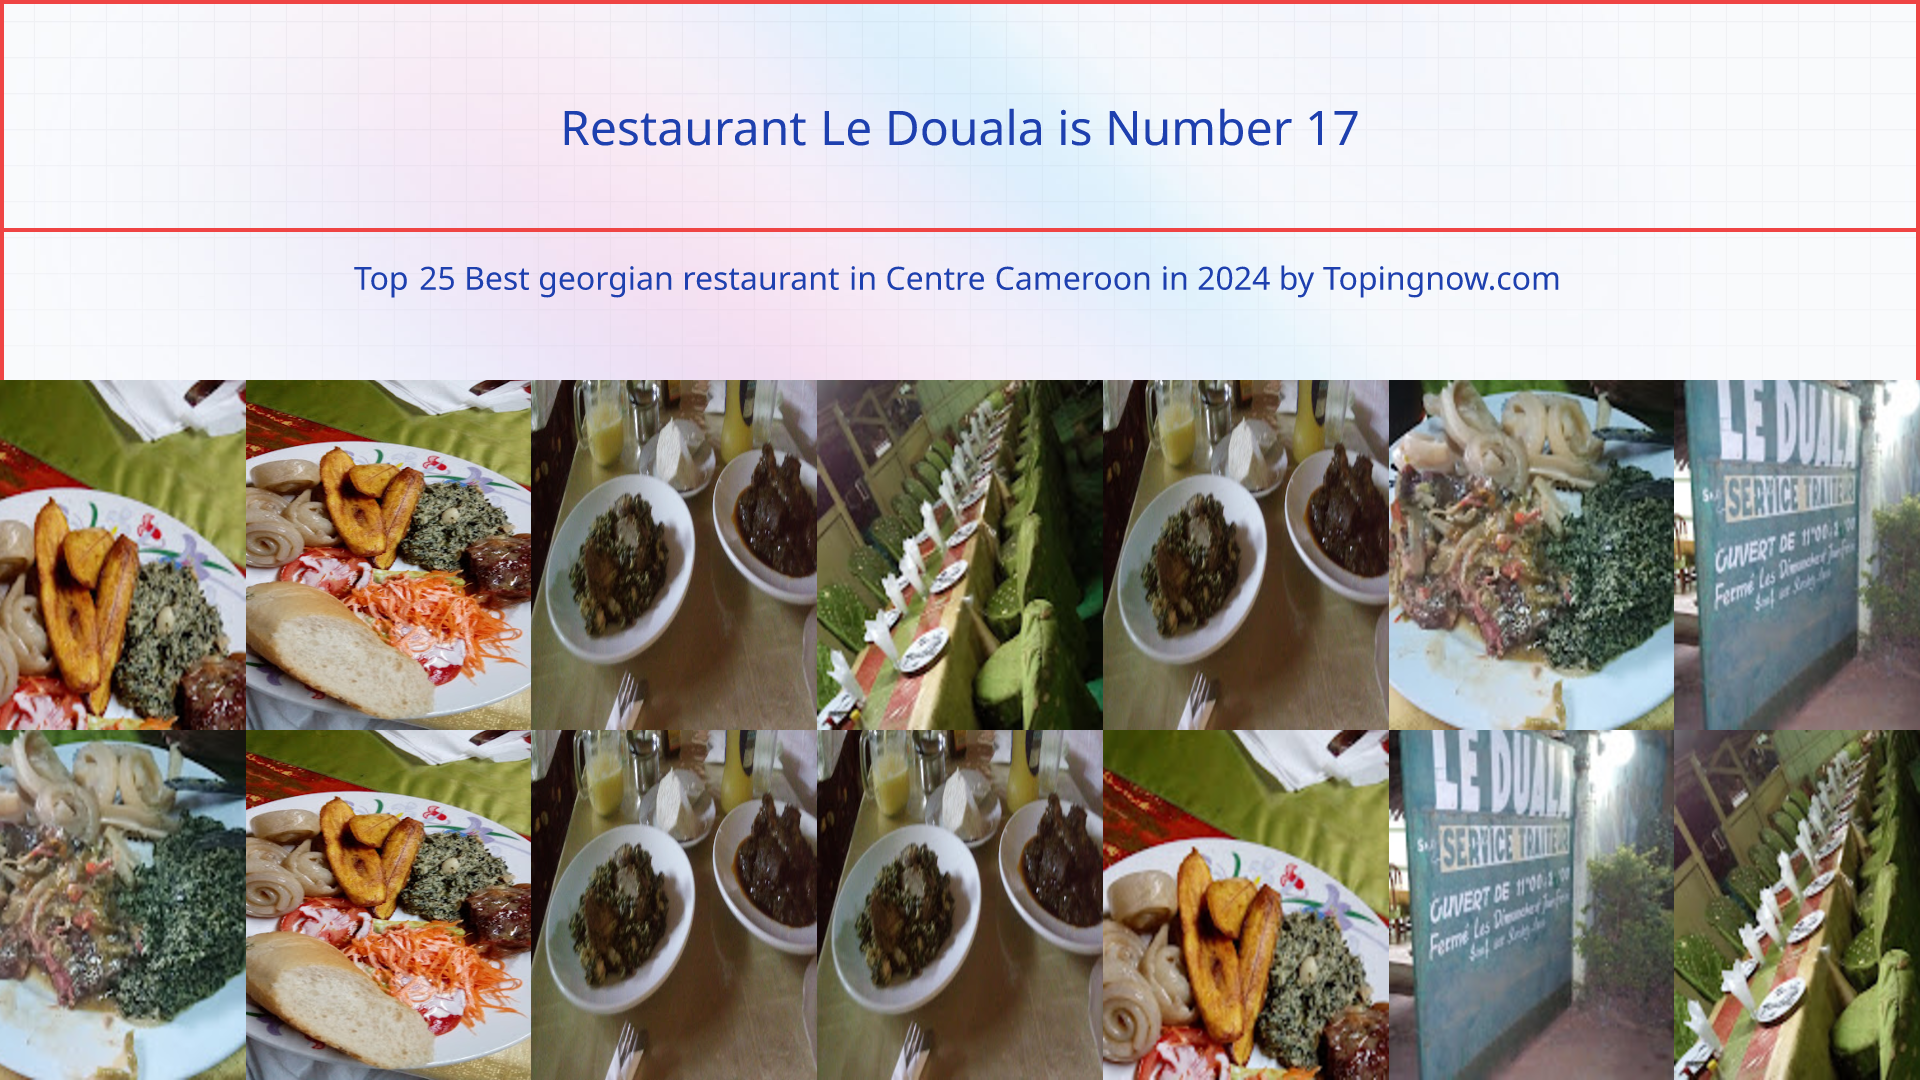 Restaurant Le Douala: Top 25 Best georgian restaurant in Centre Cameroon in 2024